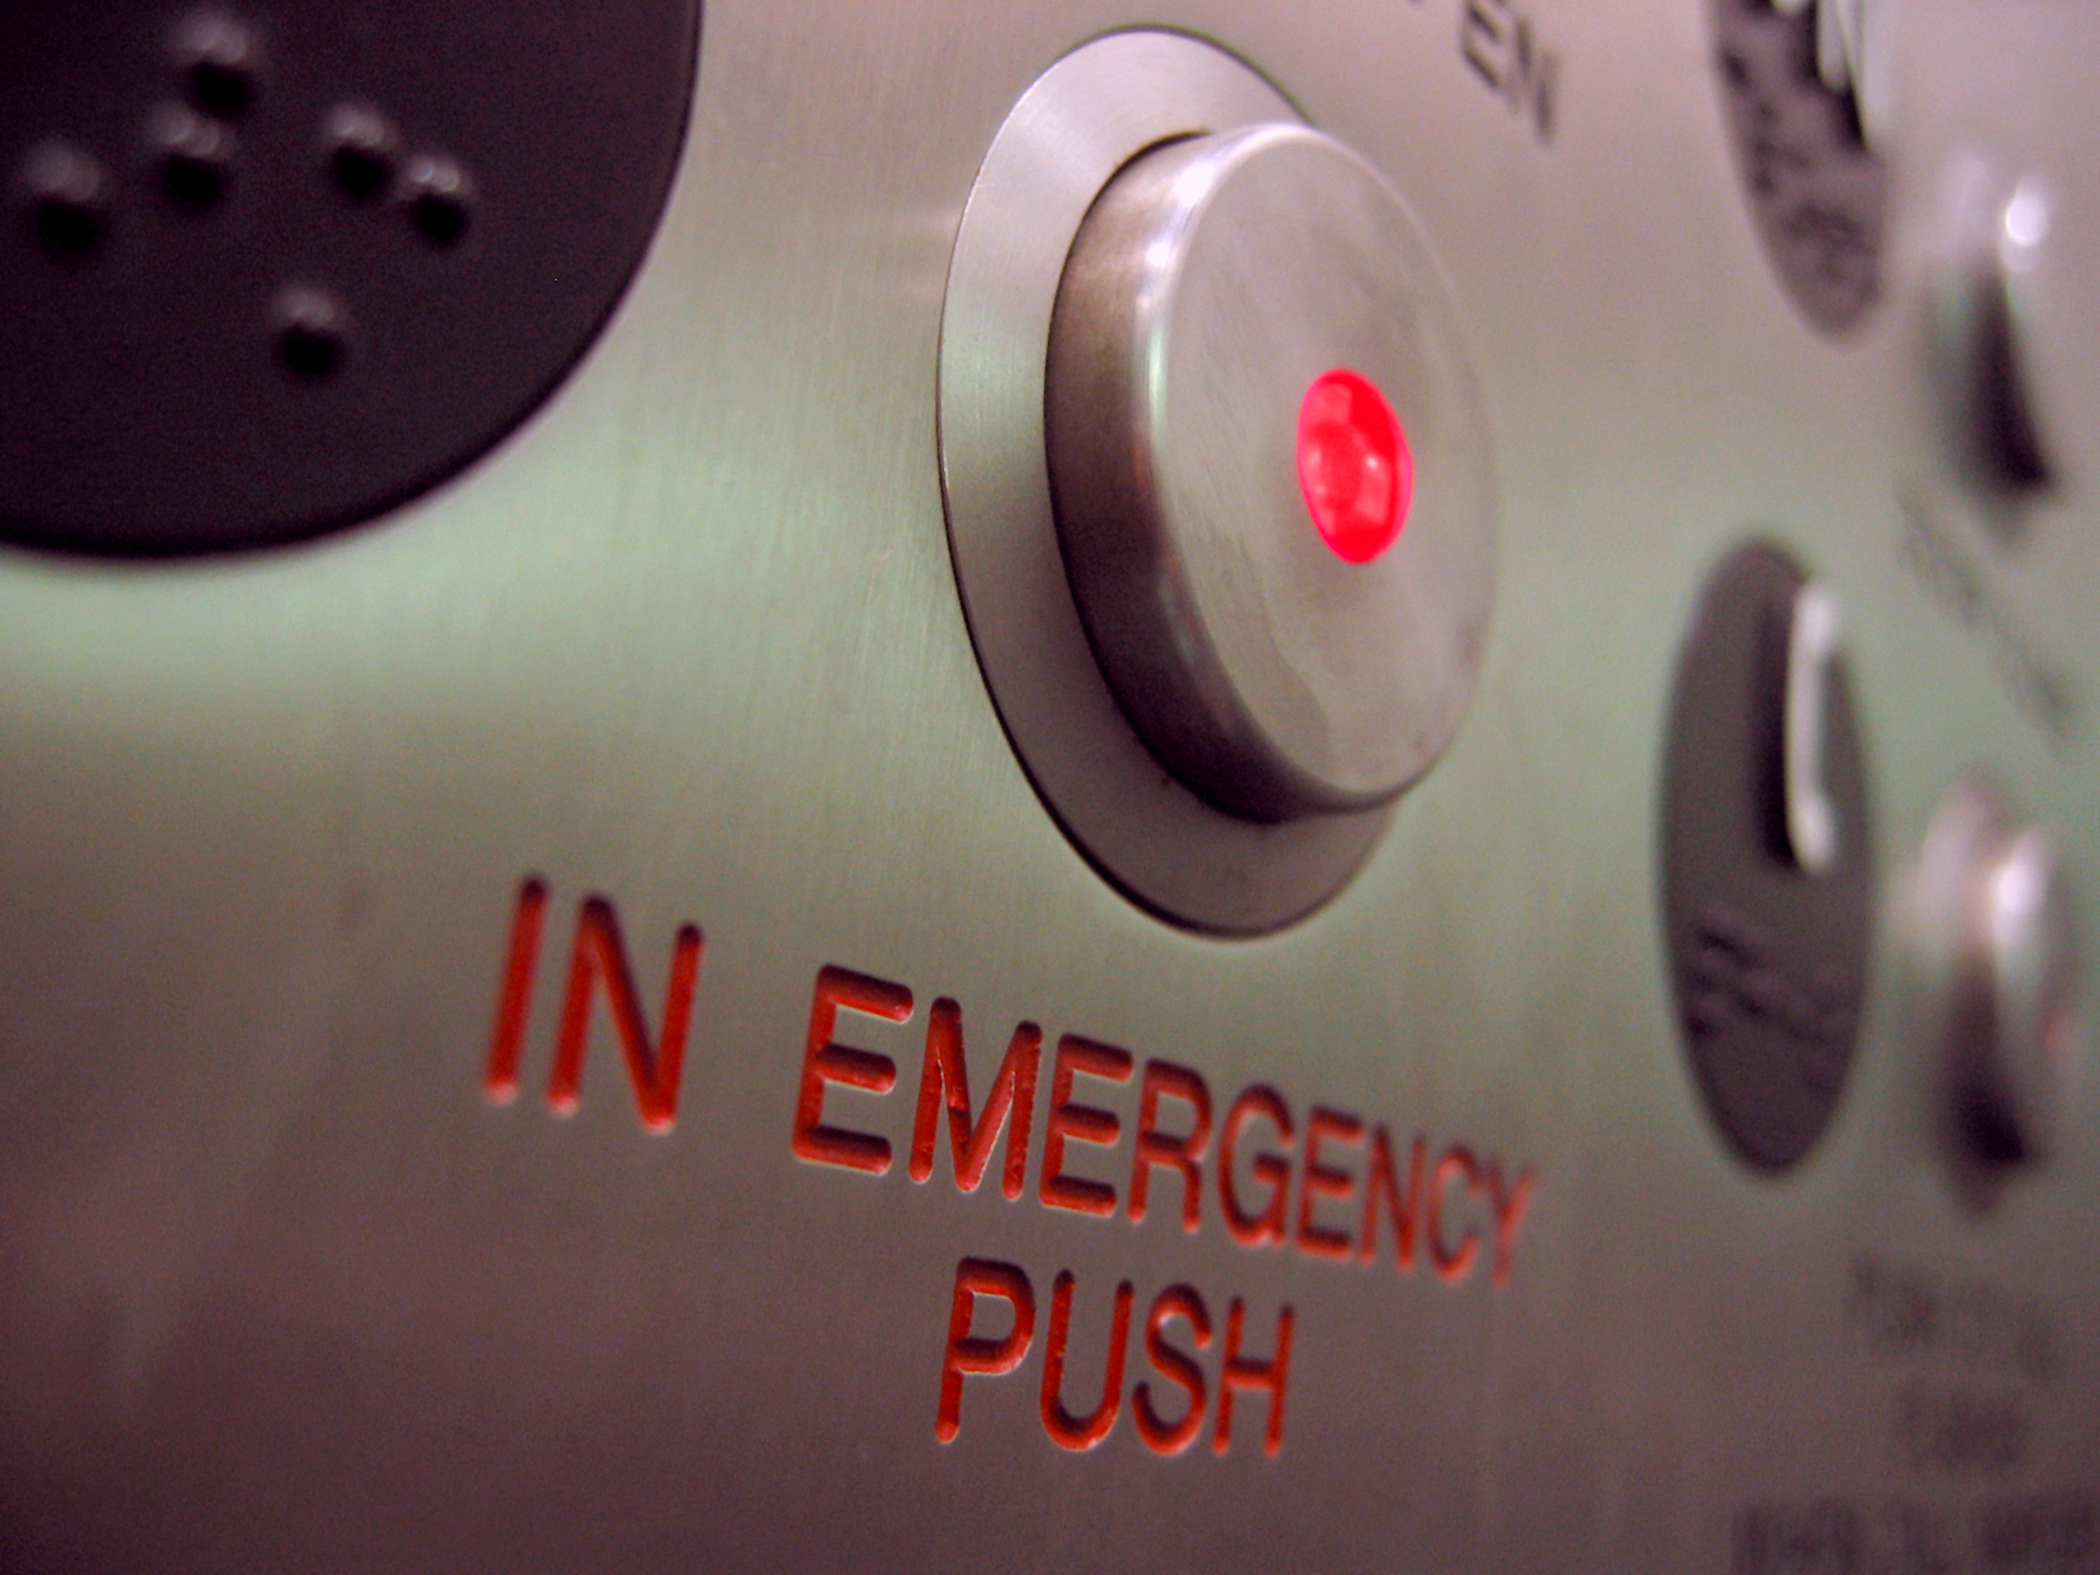 Evacuation lift emergency button